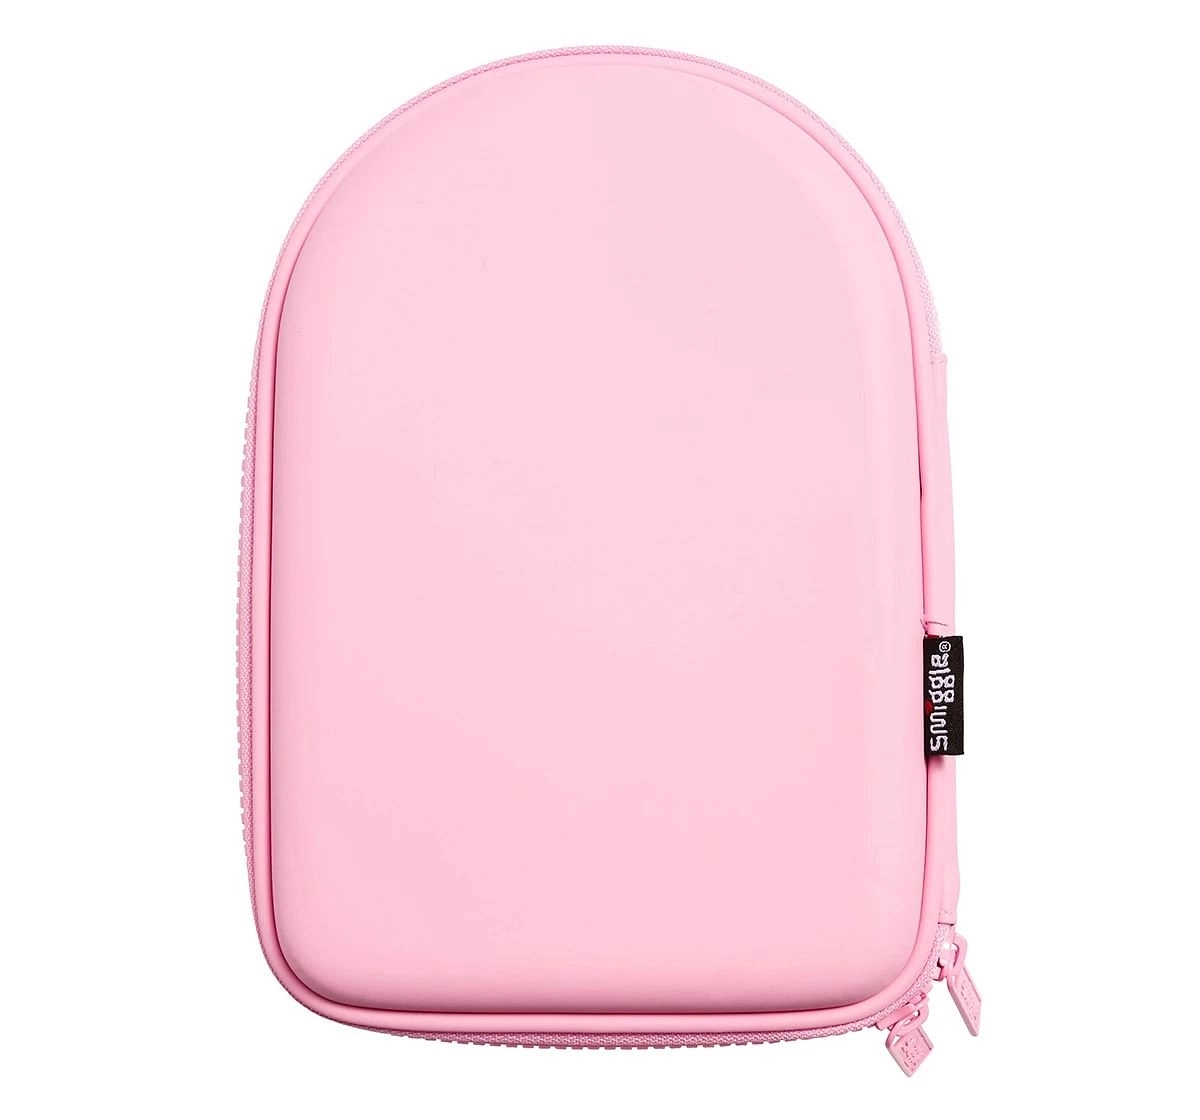 Smiggle Bright Side Hardtop Pencil Case for Kids 3Y+, Pink